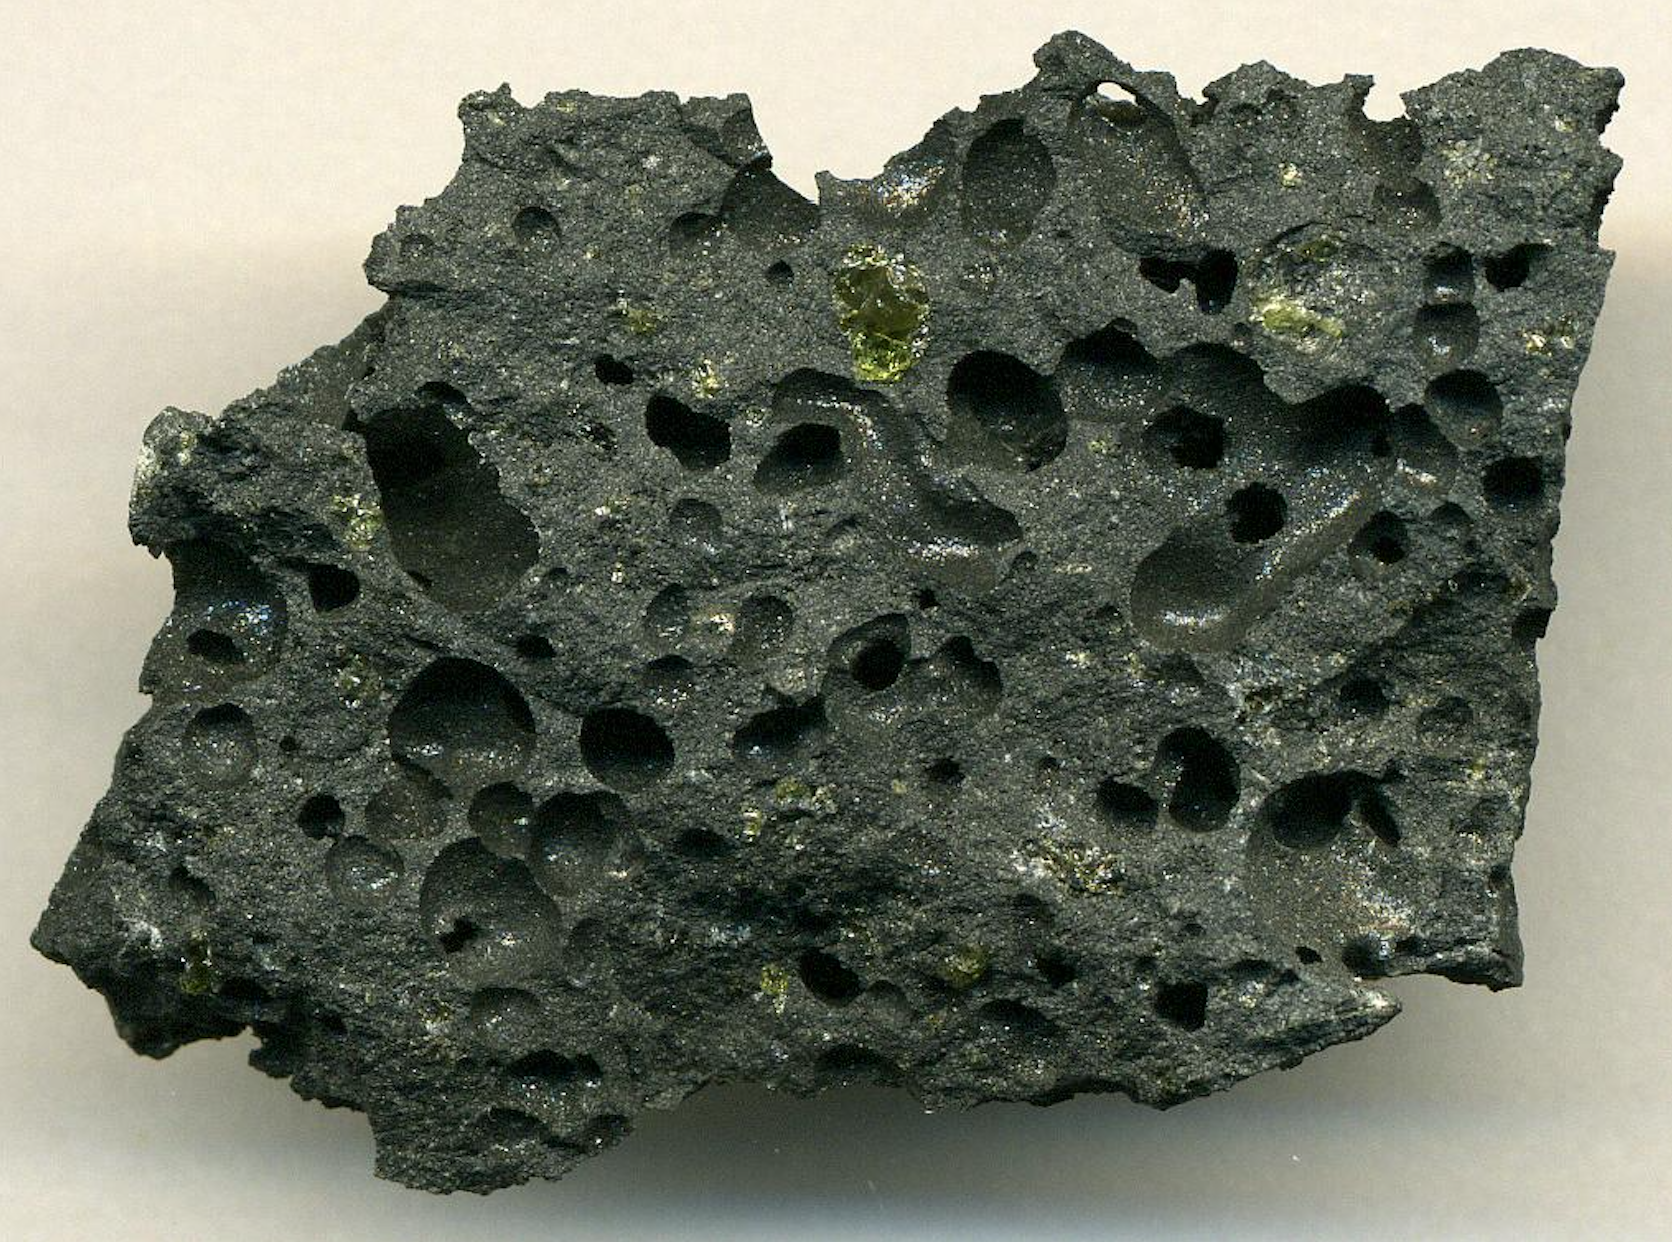 Green olivine in basalt.